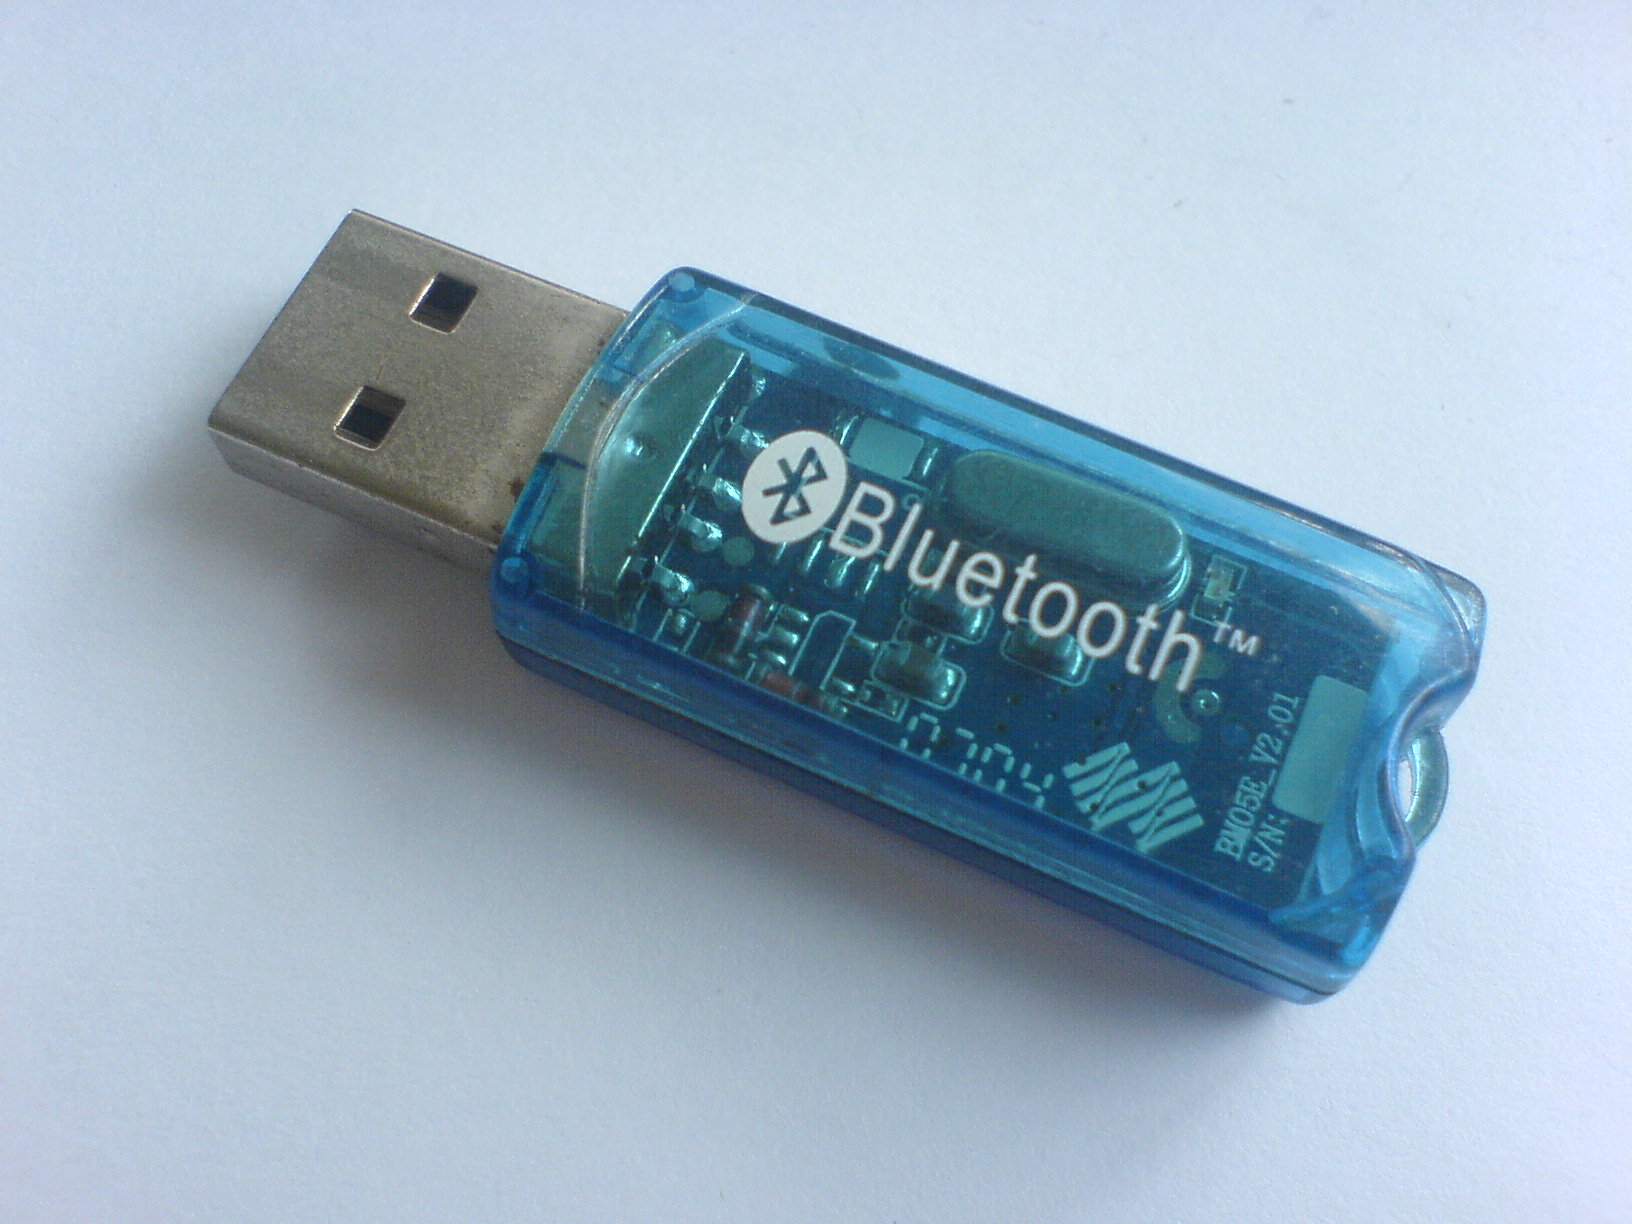 Bluetooth usb adapter драйвер. Bluetooth адаптер Dongle USB 2.0. Bcm2045 USB Bluetooth адаптер. Адаптер USB Bluetooth Dongle. Bluetooth адаптер neodrive Bluetooth 2.0.